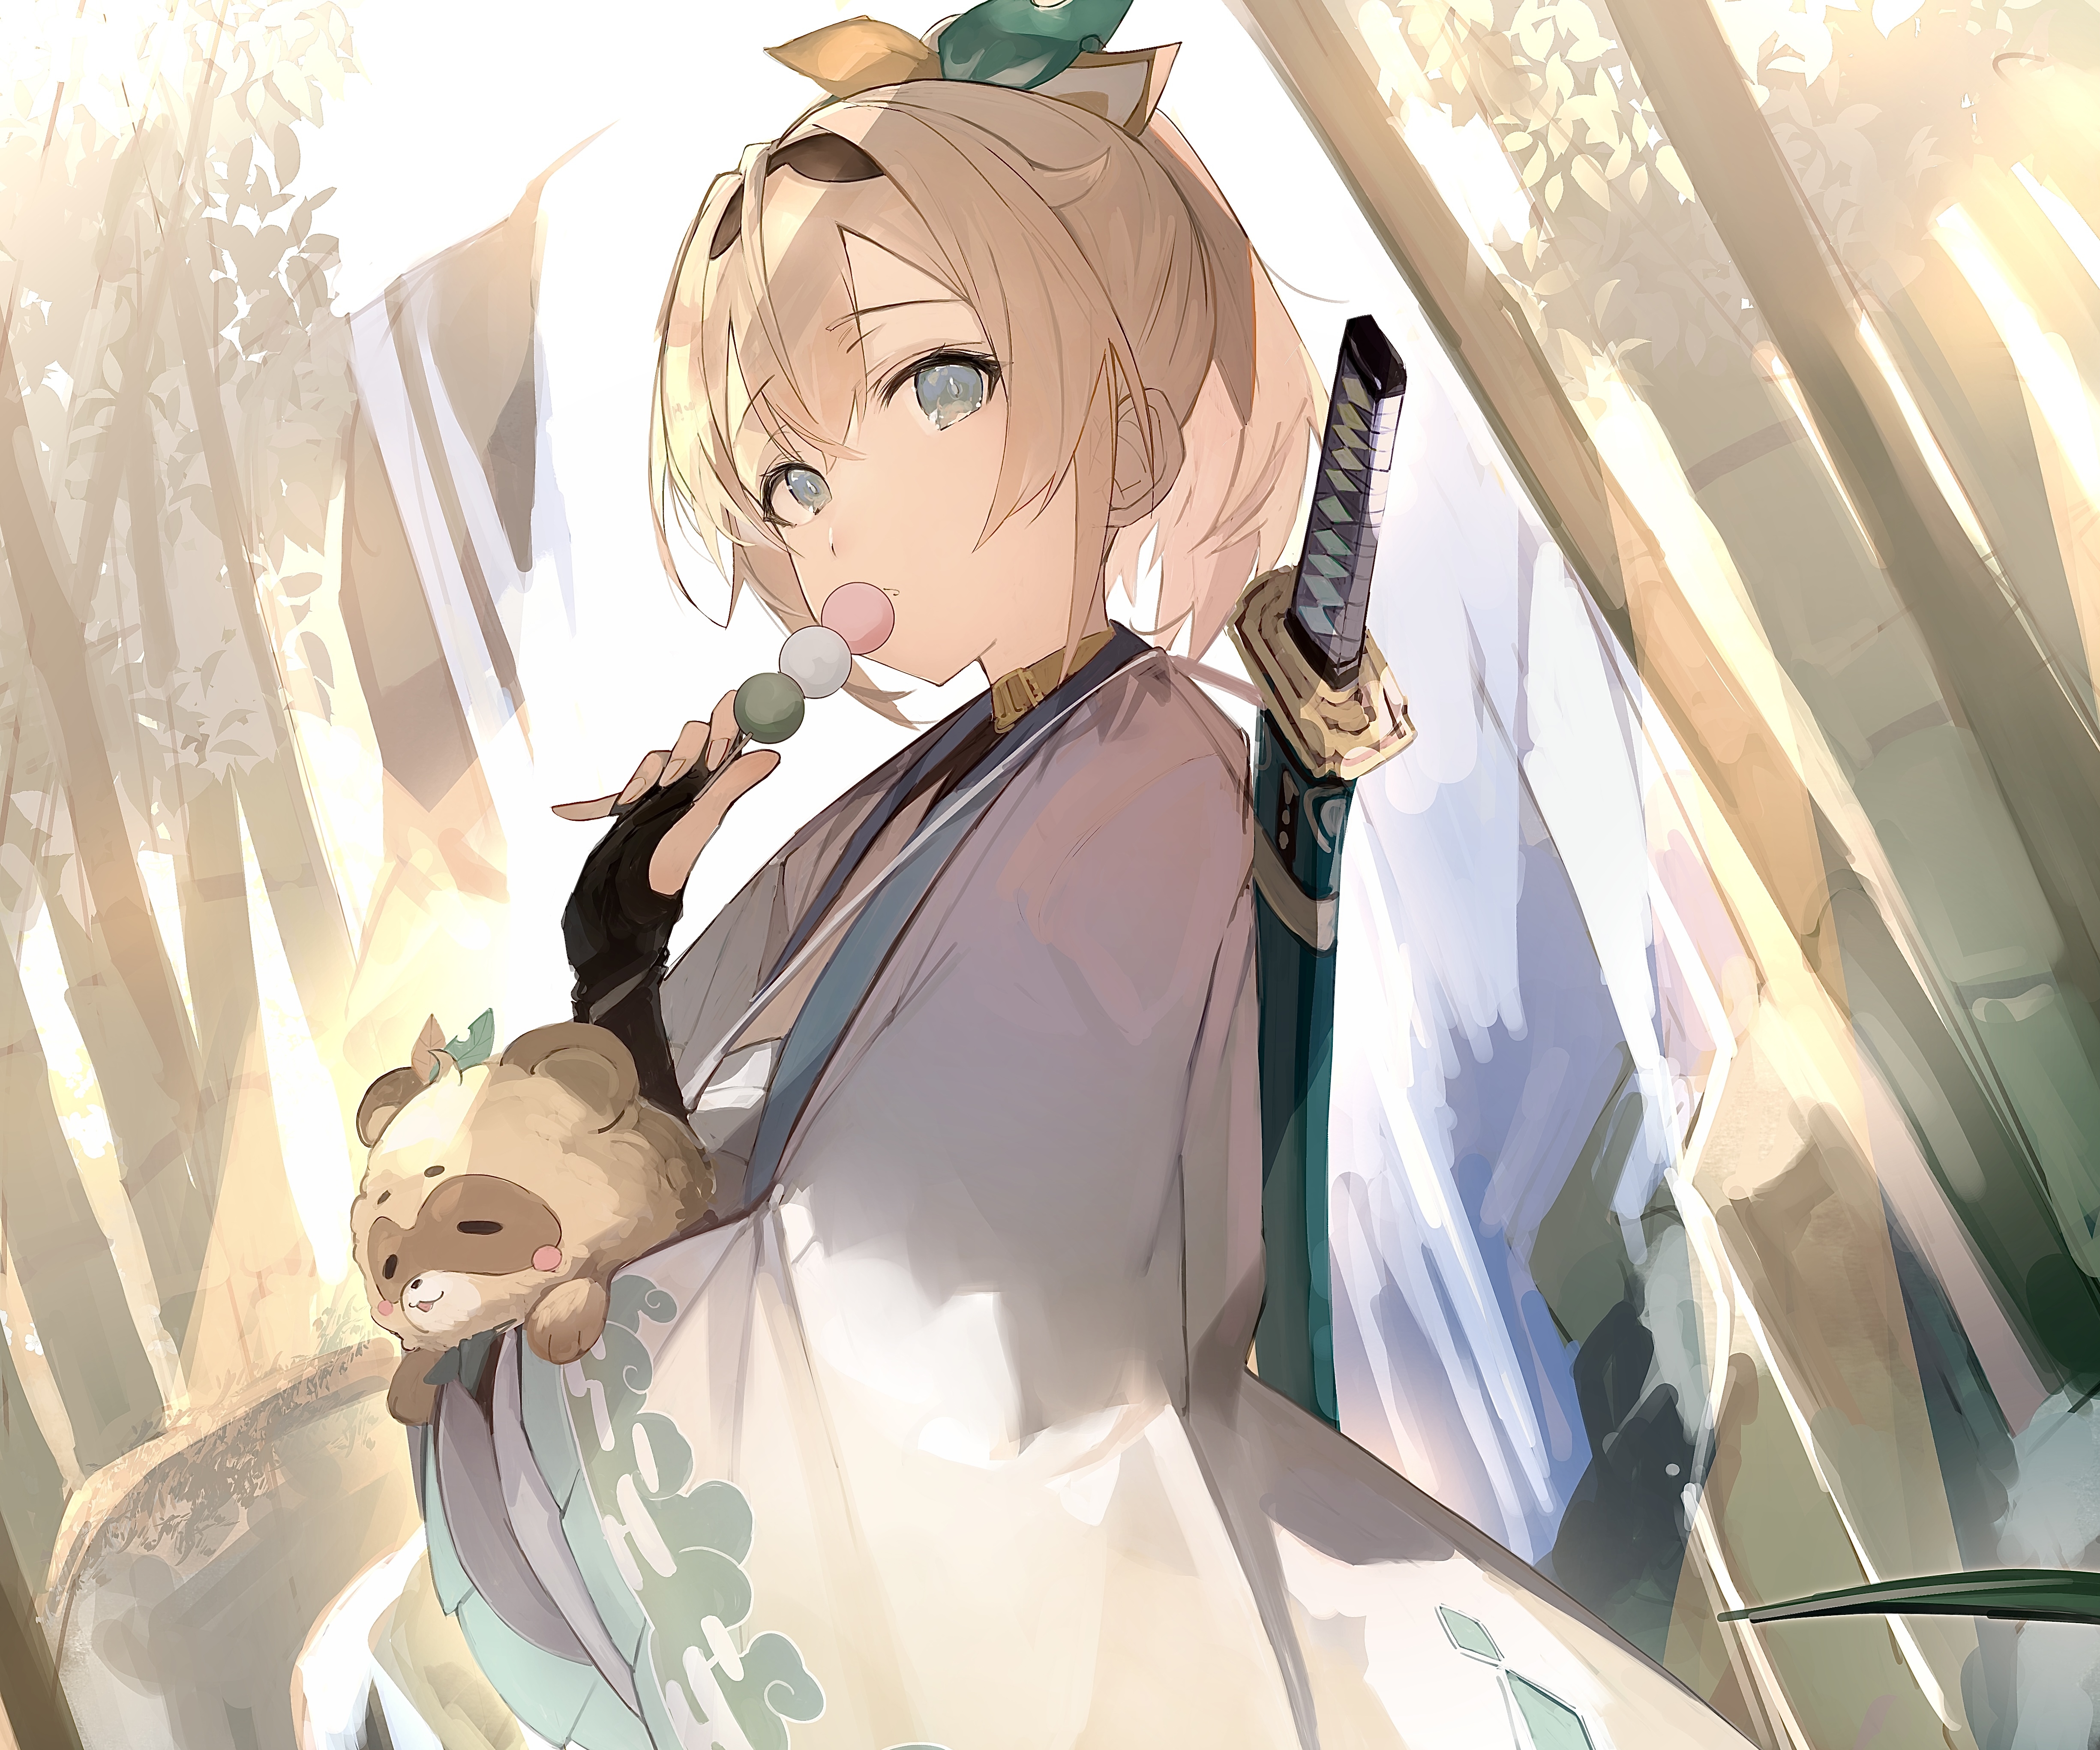 4K Kazama Iroha Wallpaper and Background Image